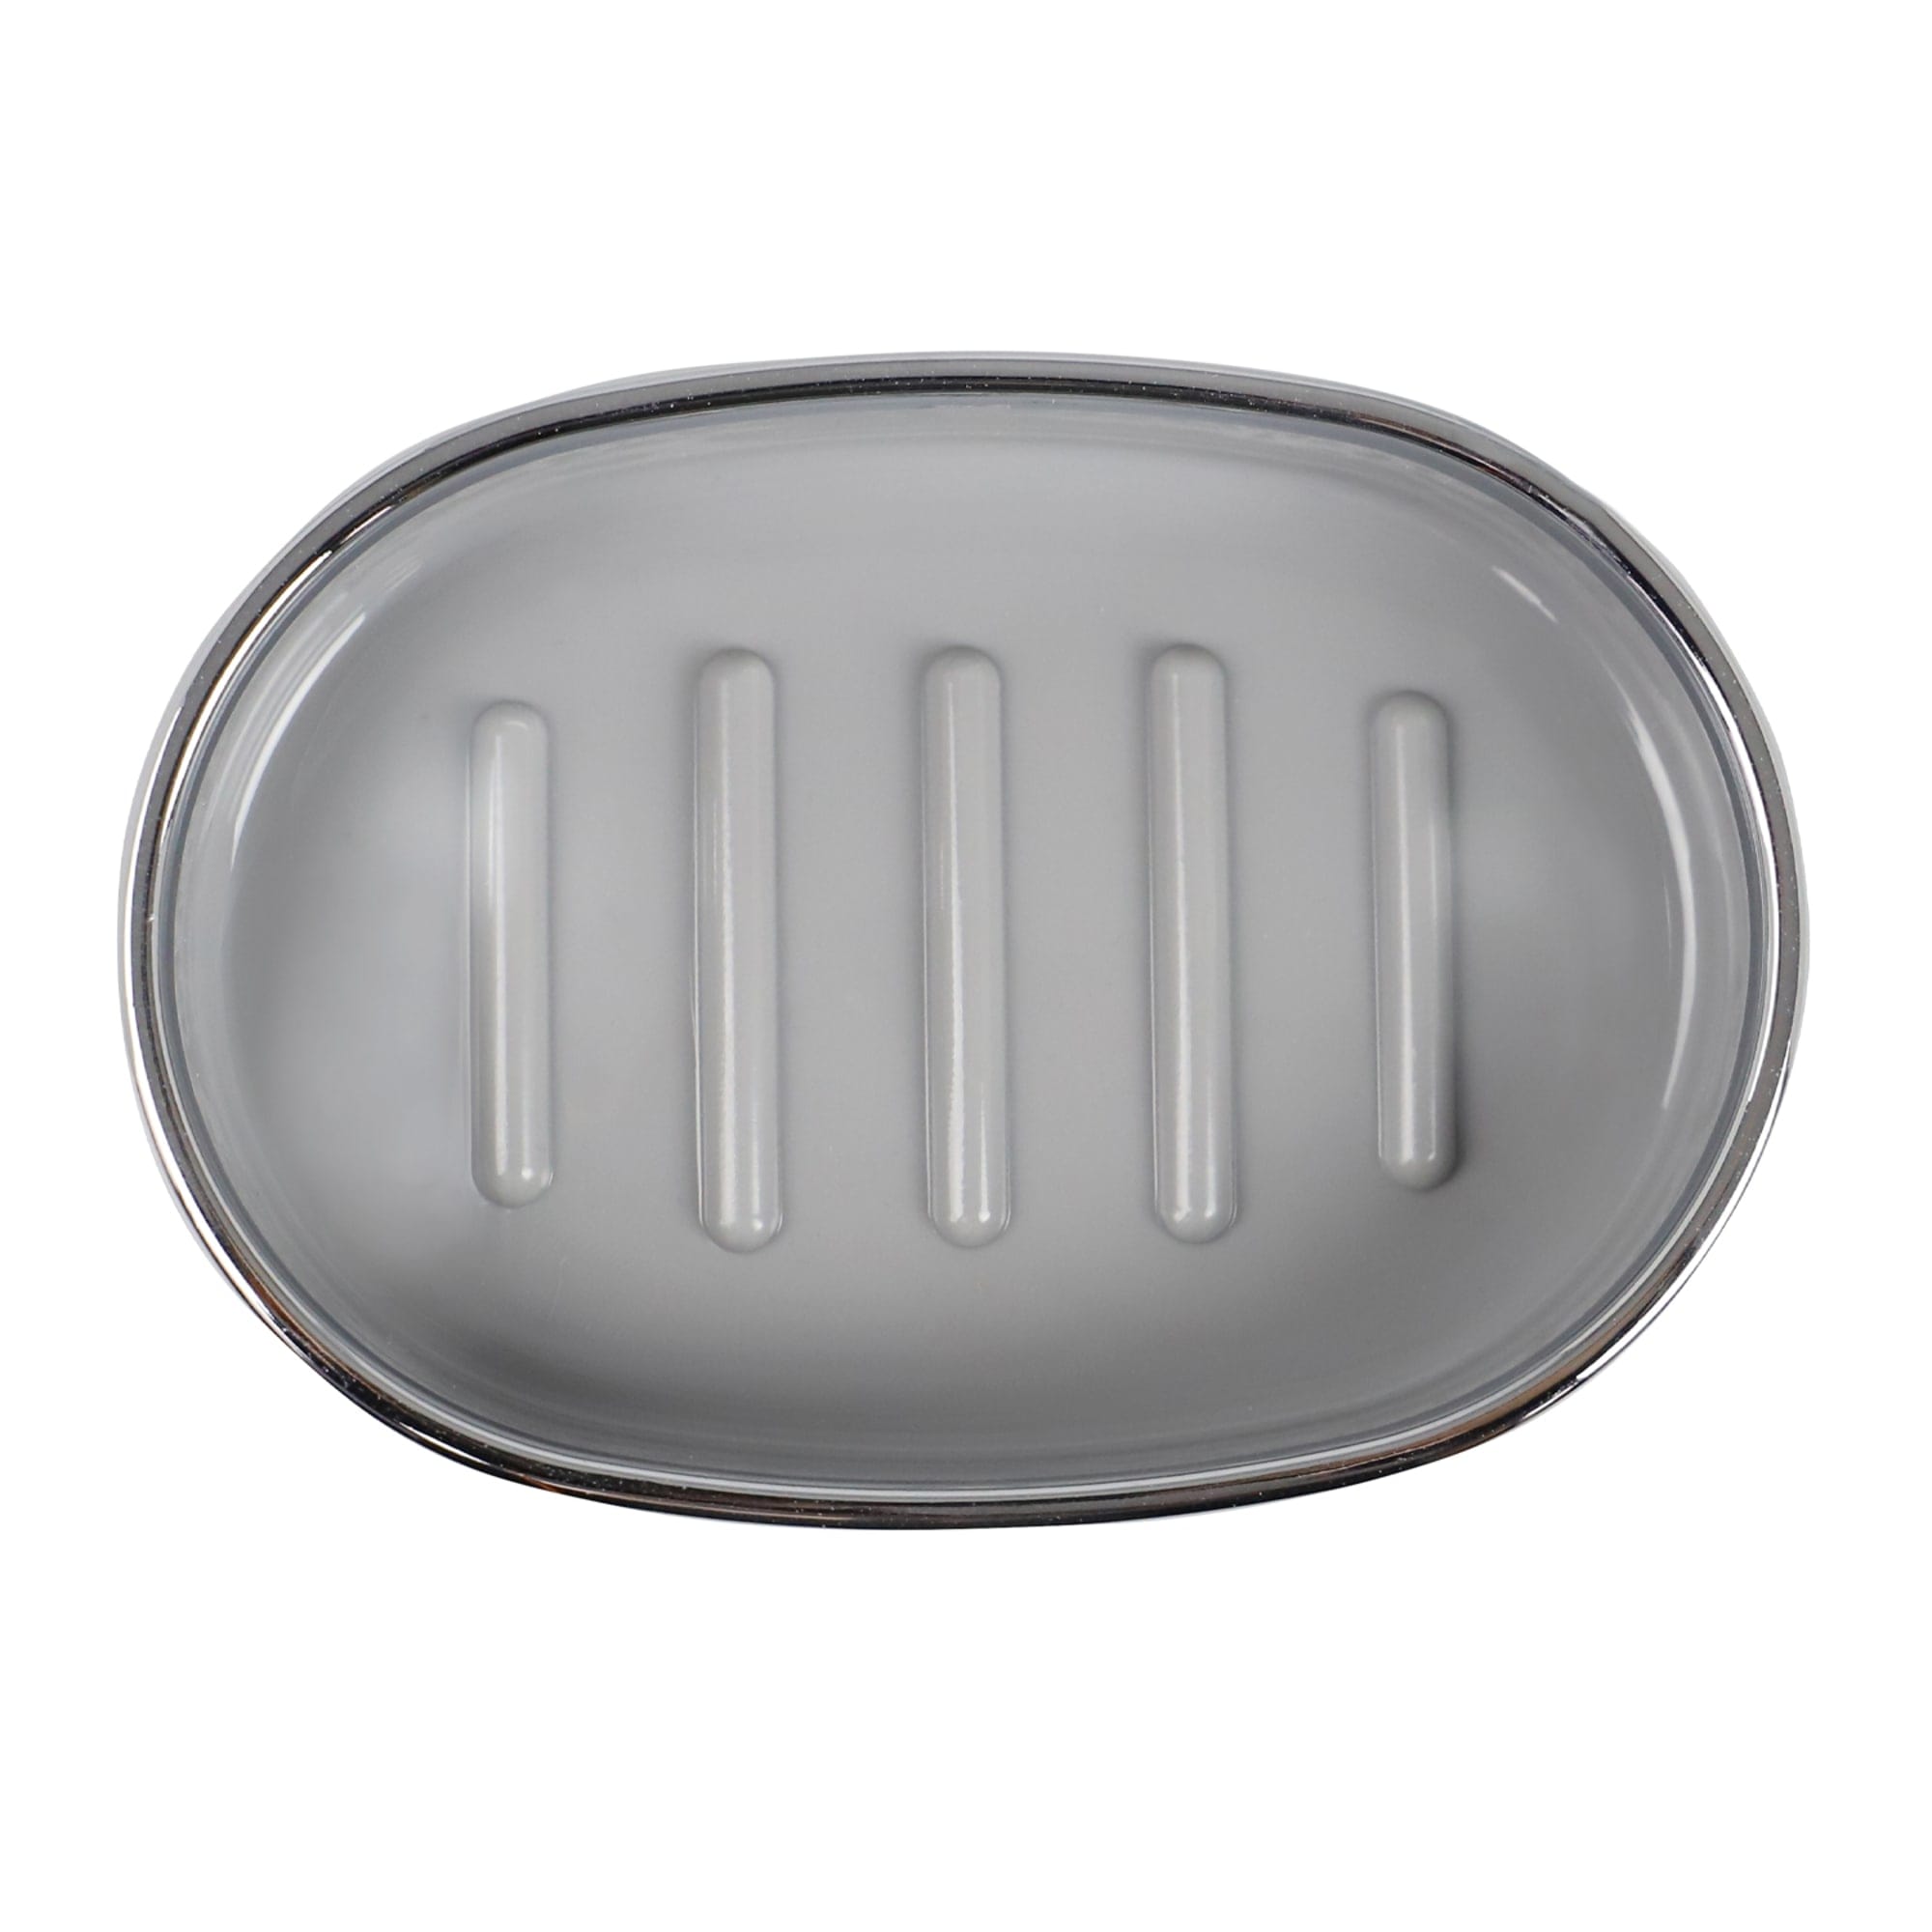 Home Basics Skylar Oval Ridged ABS Plastic Soap Dish, Grey $3.00 EACH, CASE PACK OF 12